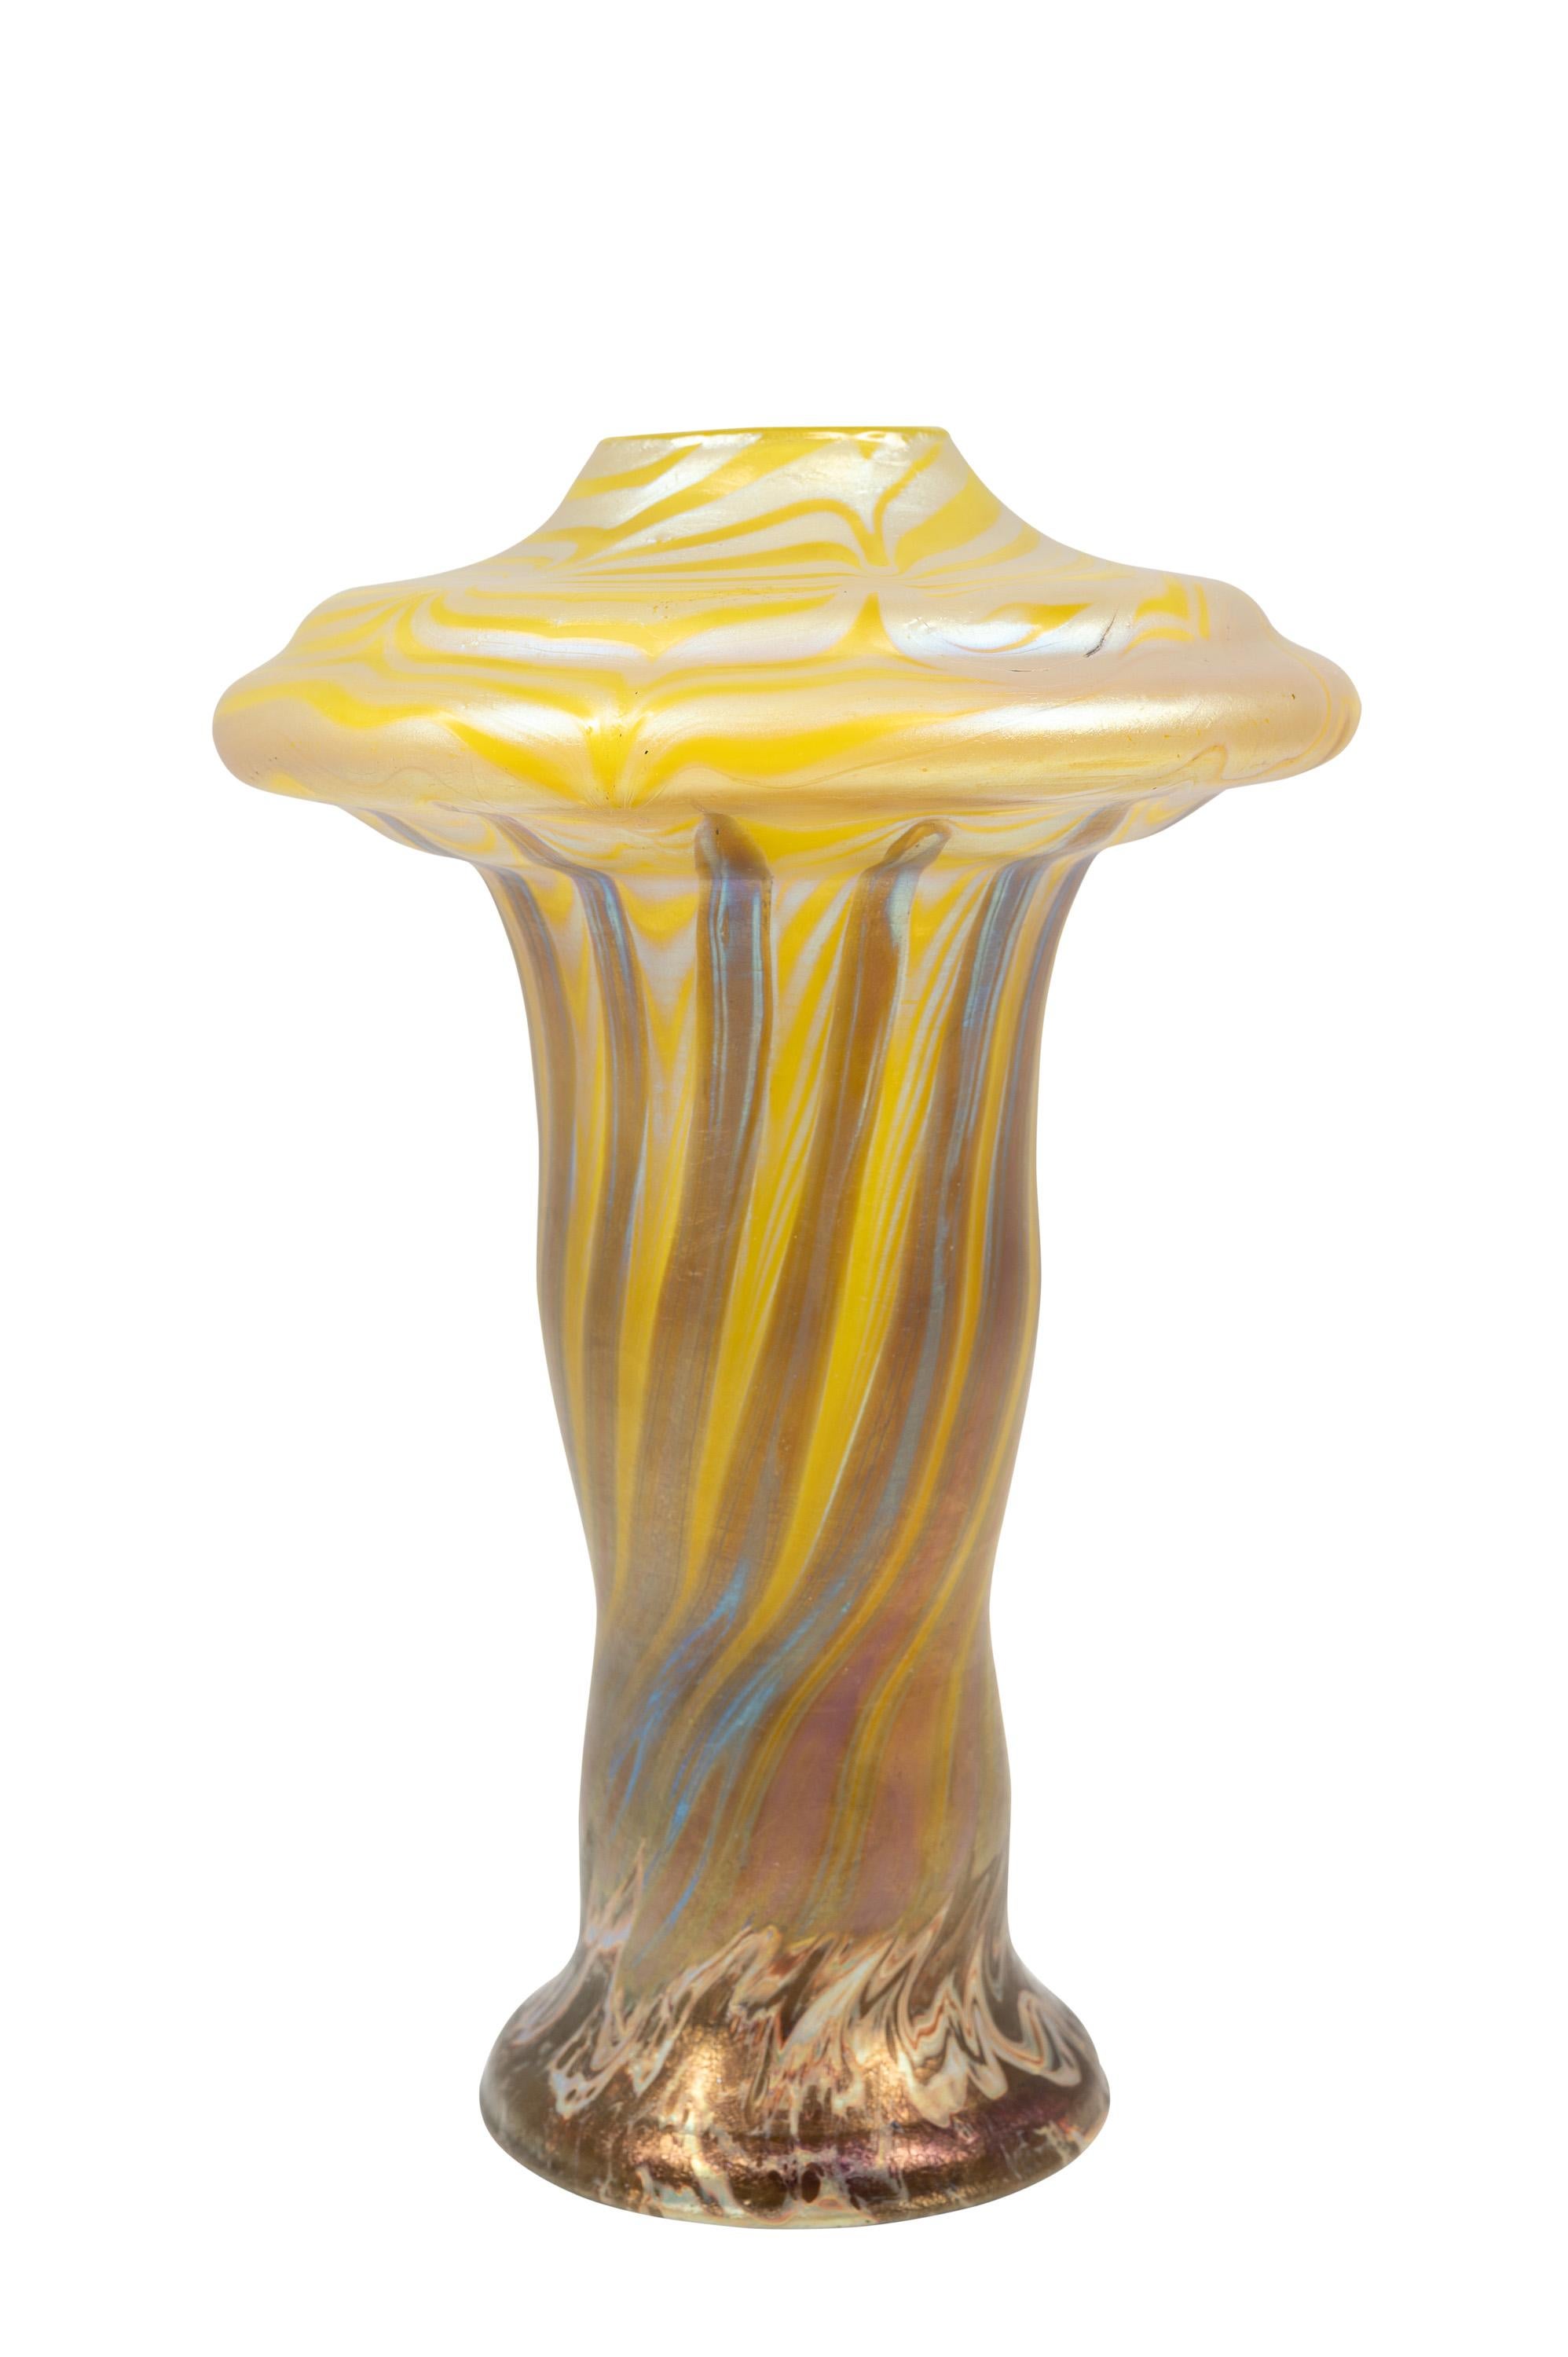 Bohemian glass vase, manufactured by Johann Loetz Witwe, PG 356 decoration, ca. 1900, signed, Paris World Exhibition, yellow, orange, brown, ochre, silver, white, Bohemia, Viennese Art Nouveau, Jugendstil, Art Deco, art glass, iridescent